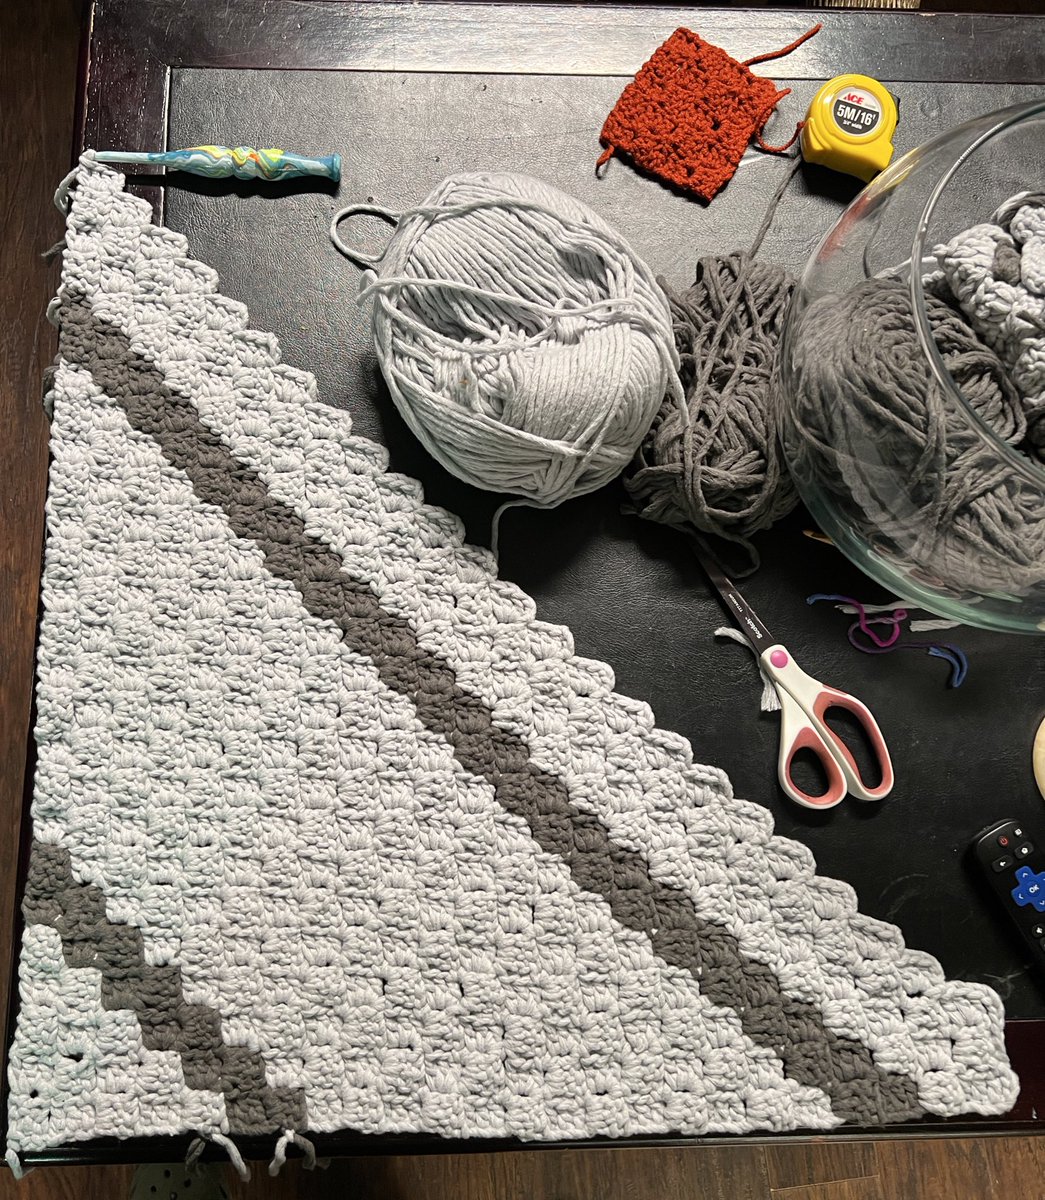 I’m crocheting again. So that’s newish.